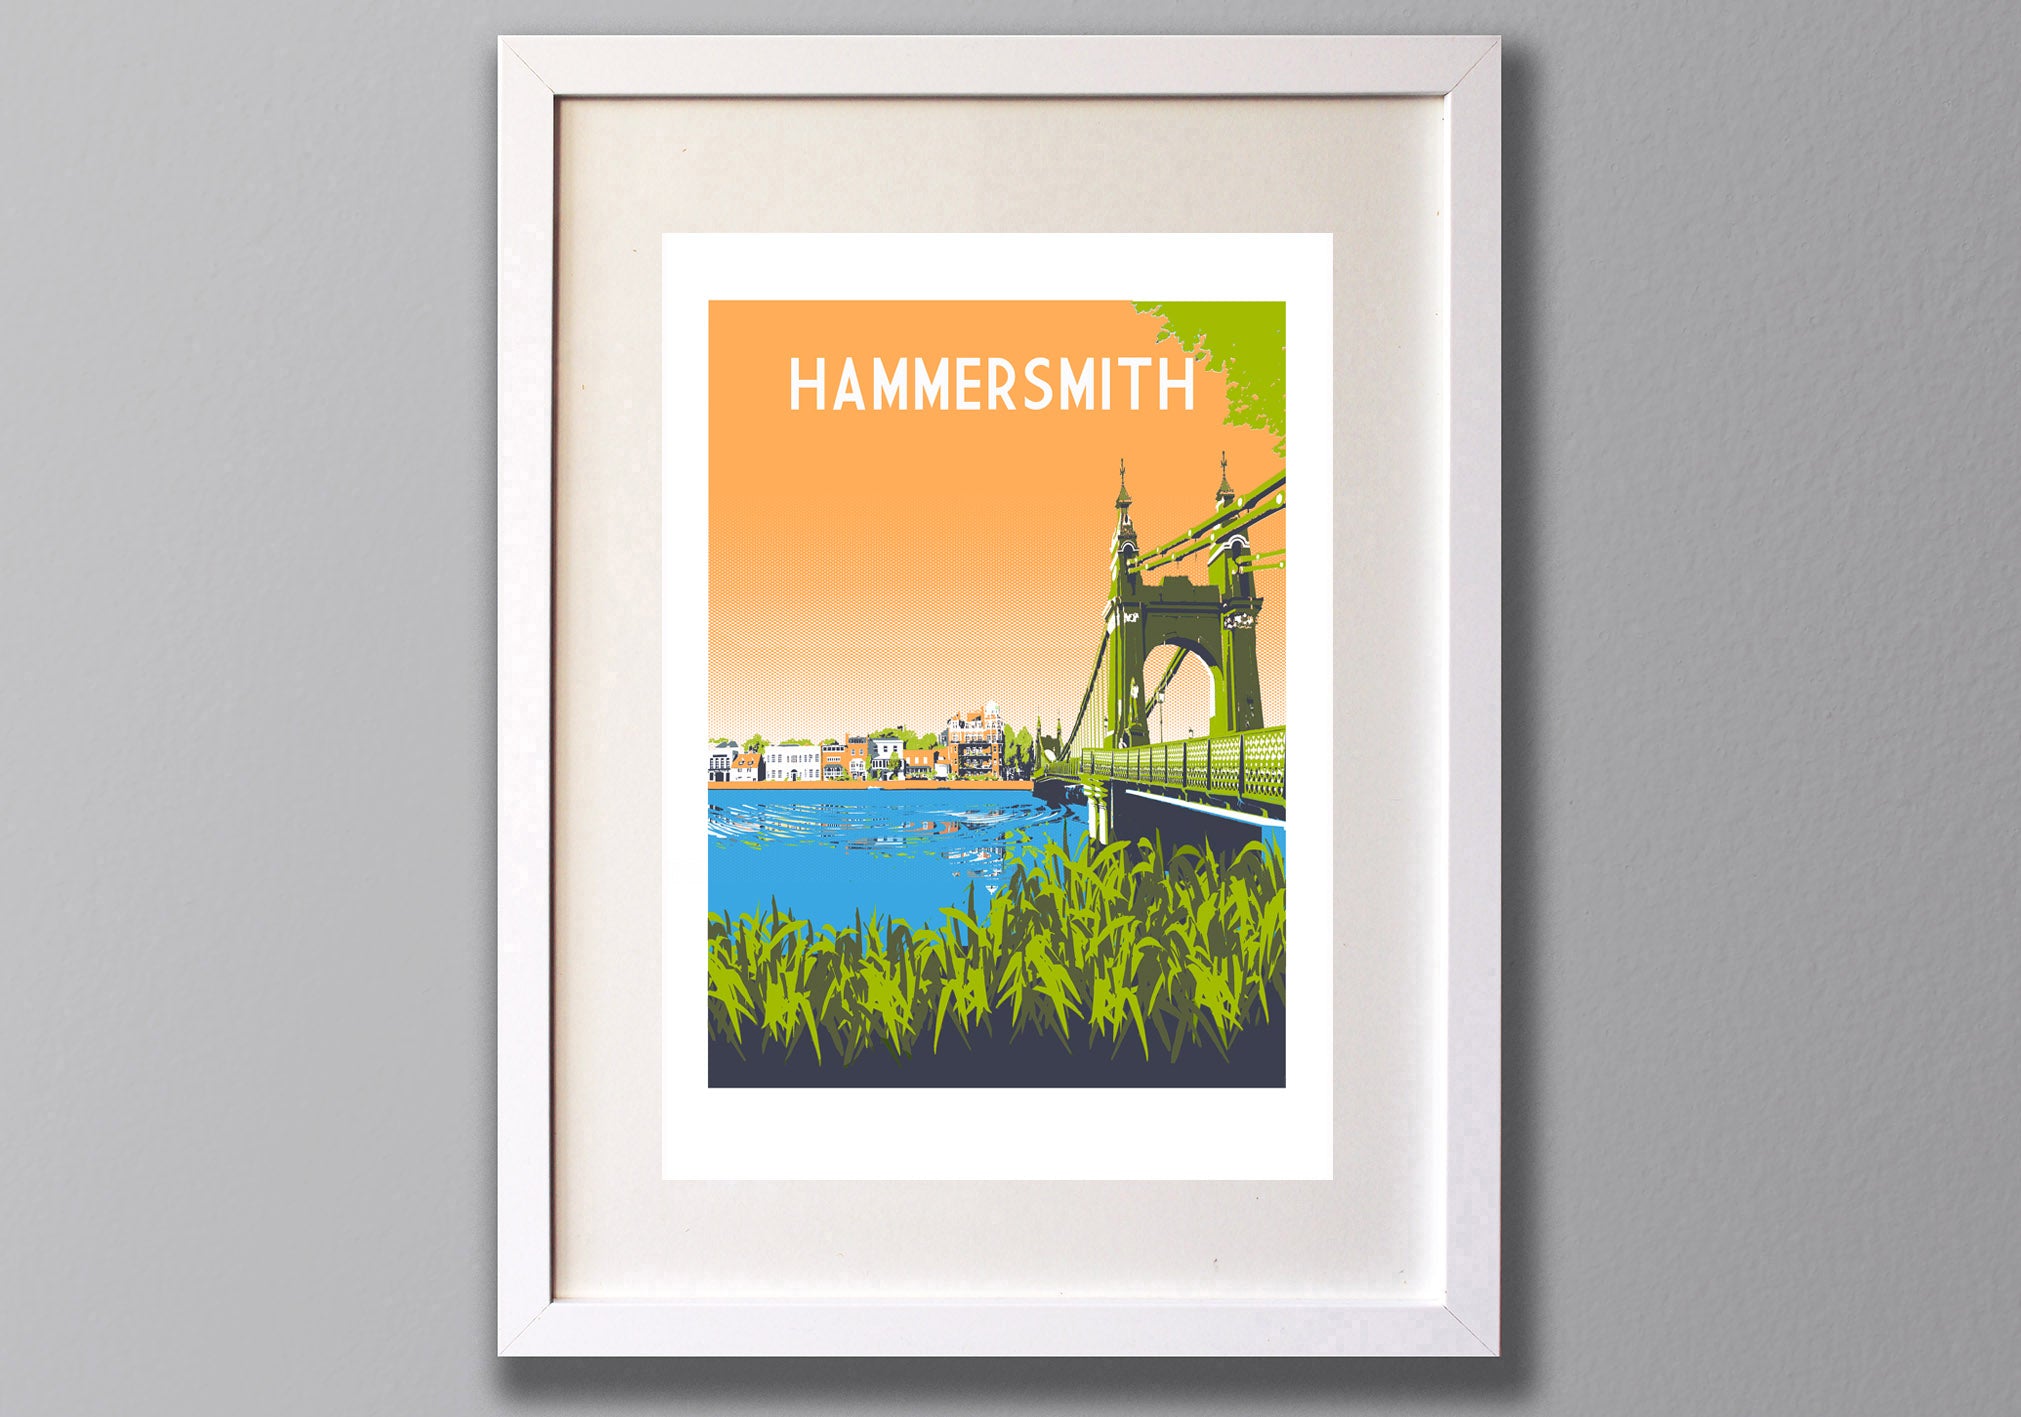 Hammersmith Art Print, Limited Edition Art, A3 London Illustration